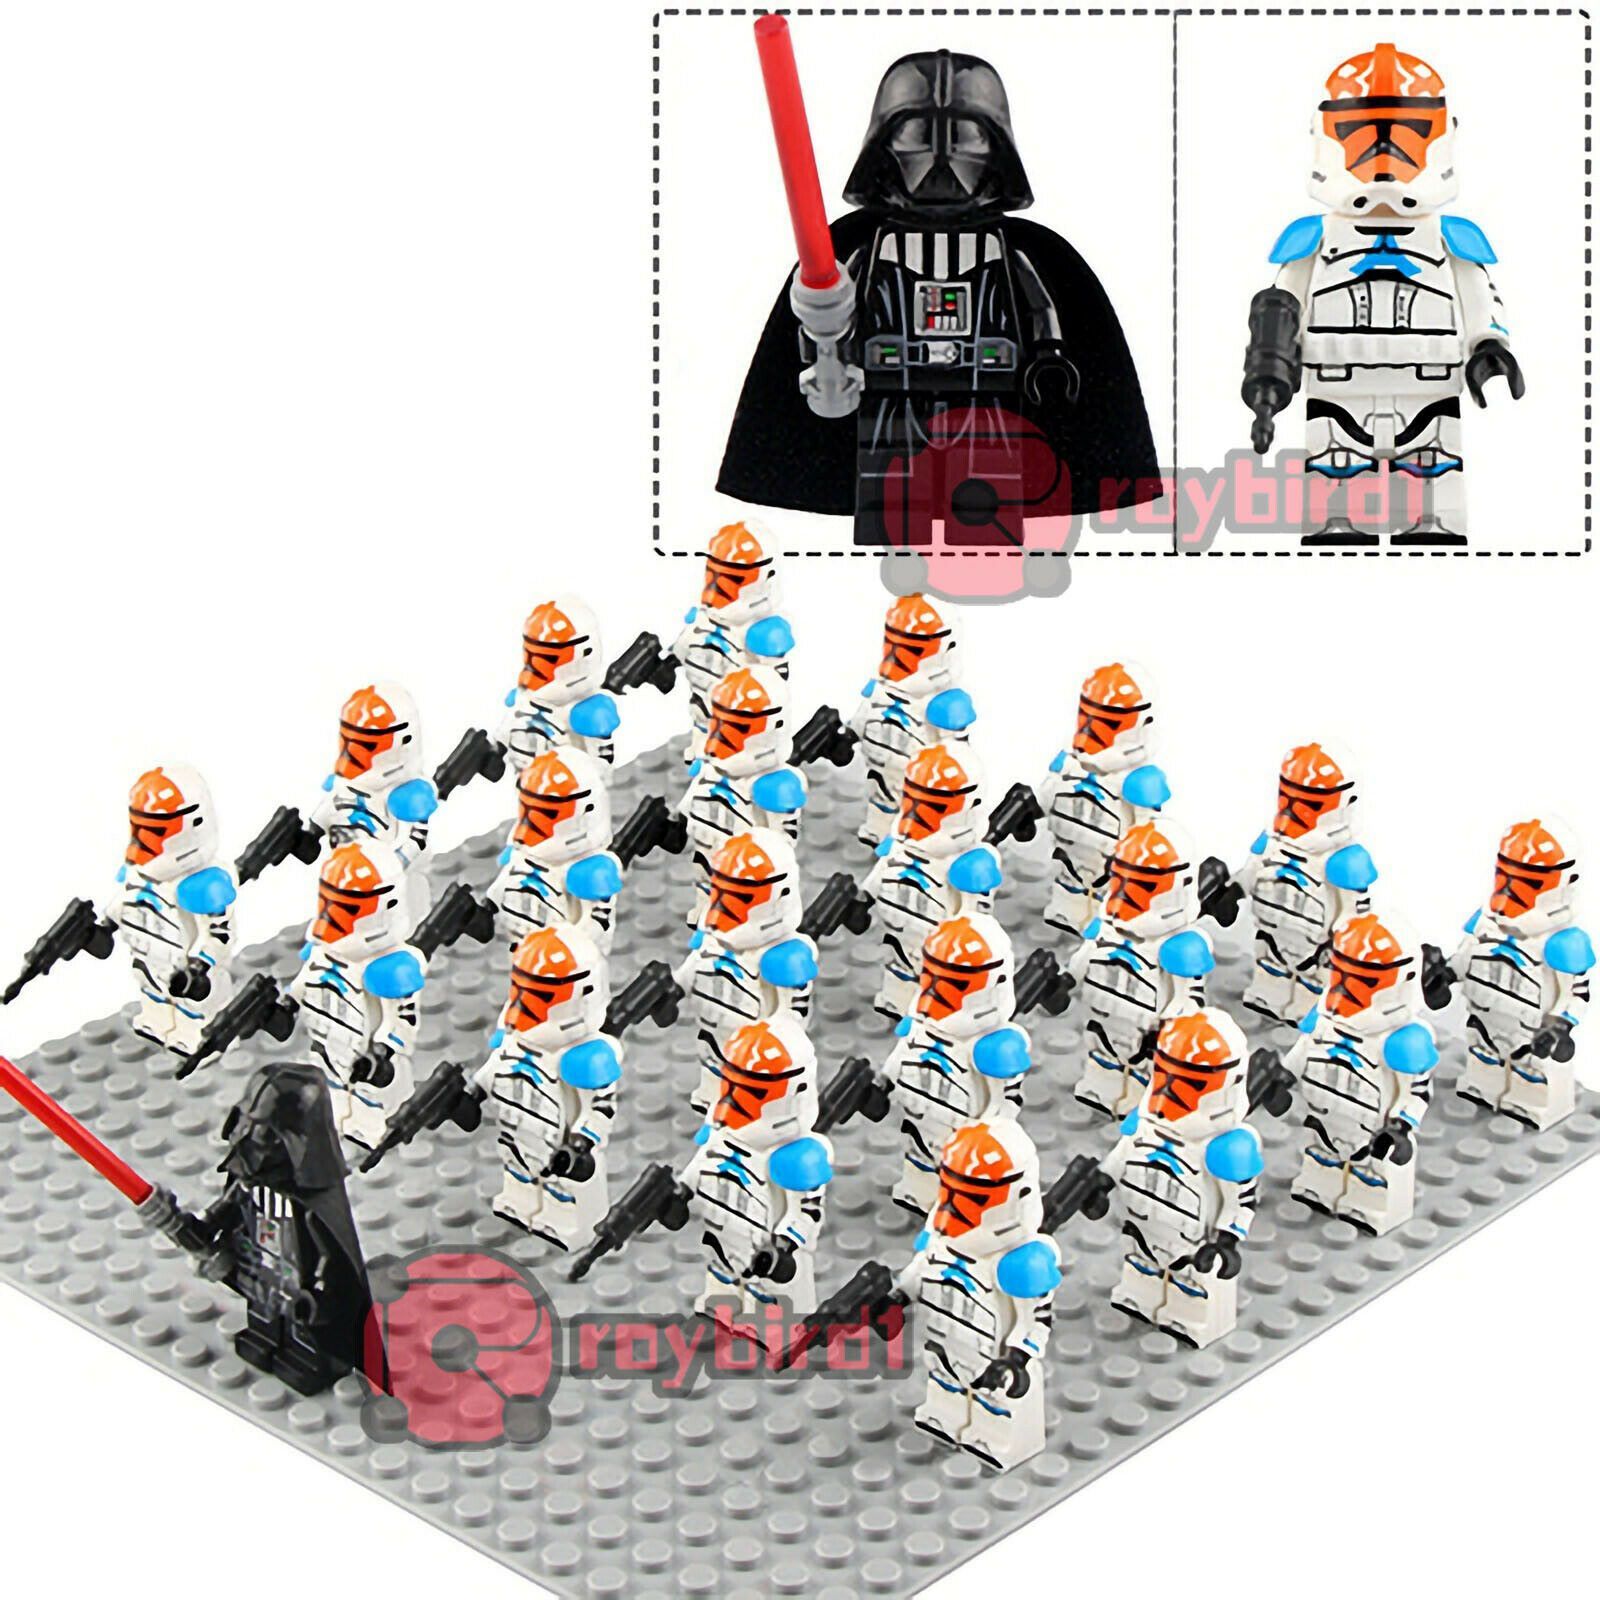 21Pcs Darth Vader Commander 322nd Legion Clone Trooper Star Wars Minifigures Toy